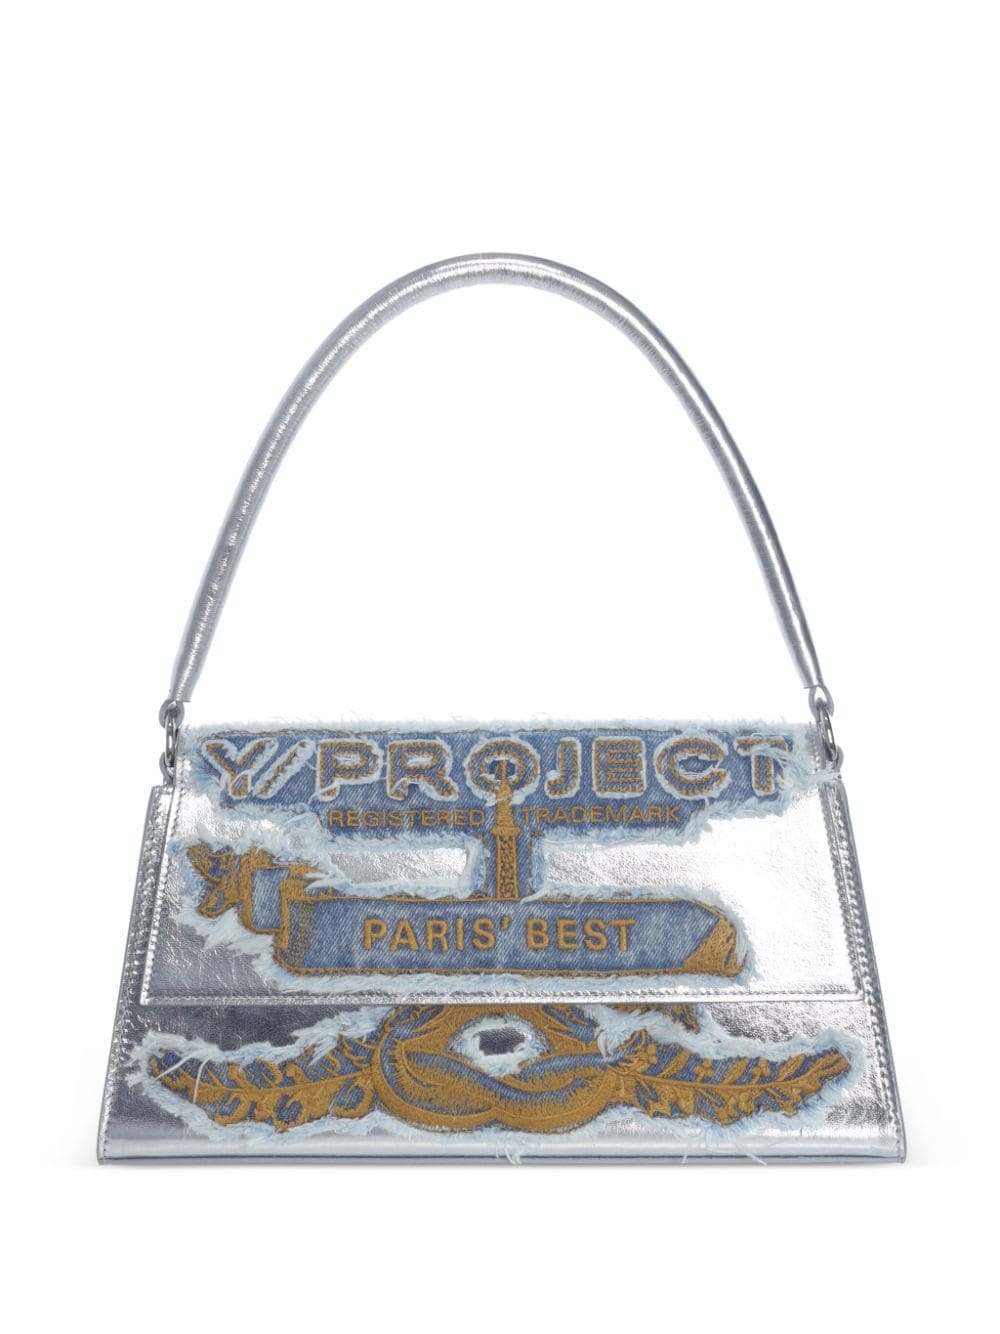 Y/Project Paris' Best metallic shoulder bag - Grey